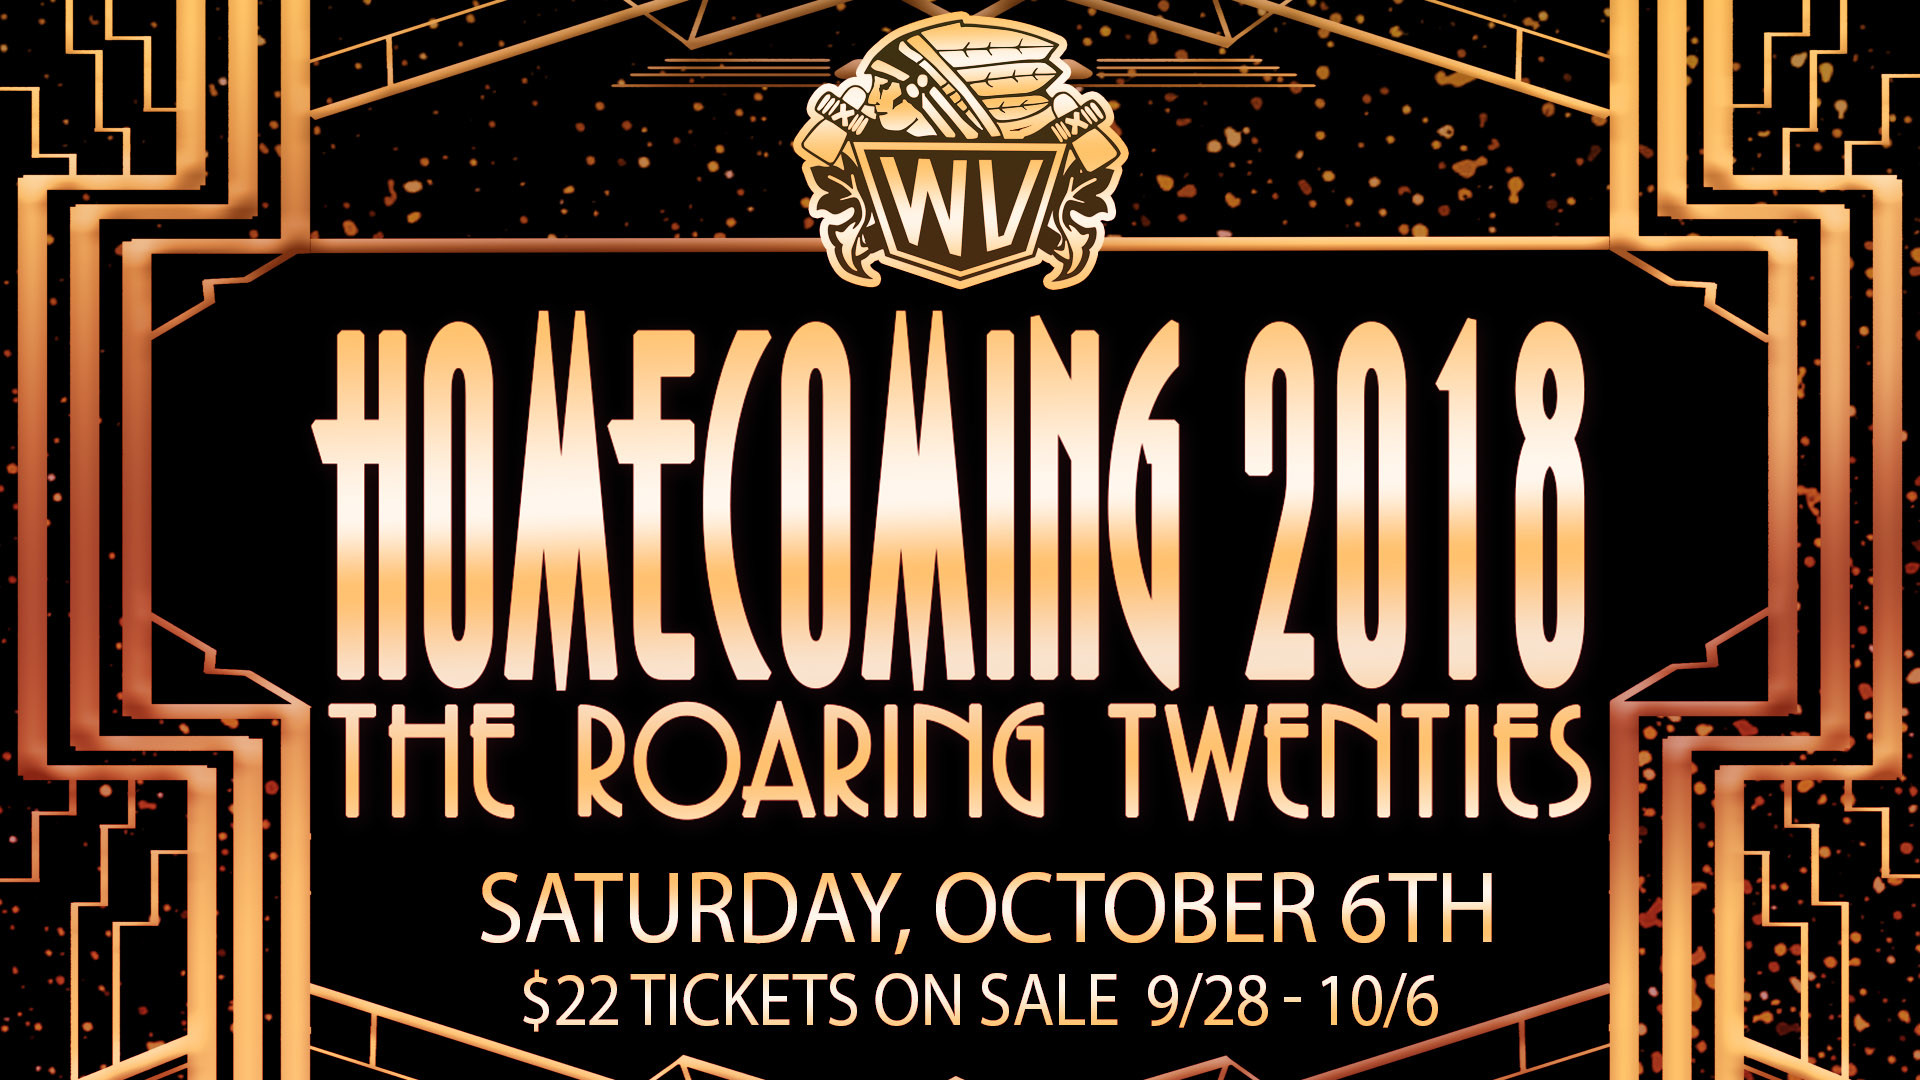 1920x1080 Homecoming 'The Roaring Twenties' Ticket Sales